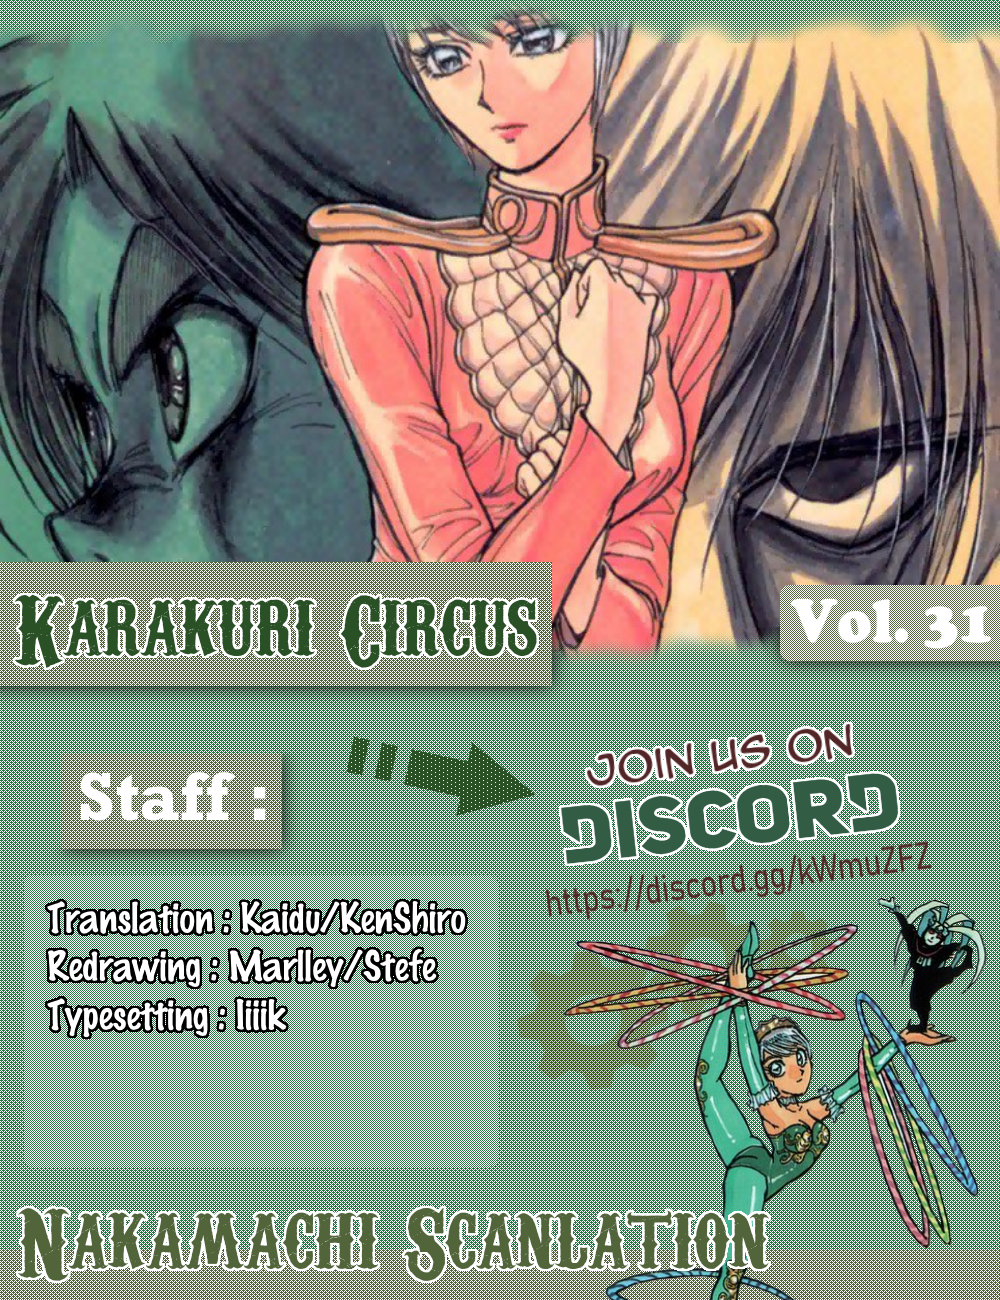 Karakuri Circus Chapter 299: Main Part - Welcome To The Kuroga Village - Act 17: Winner Decided - Picture 2